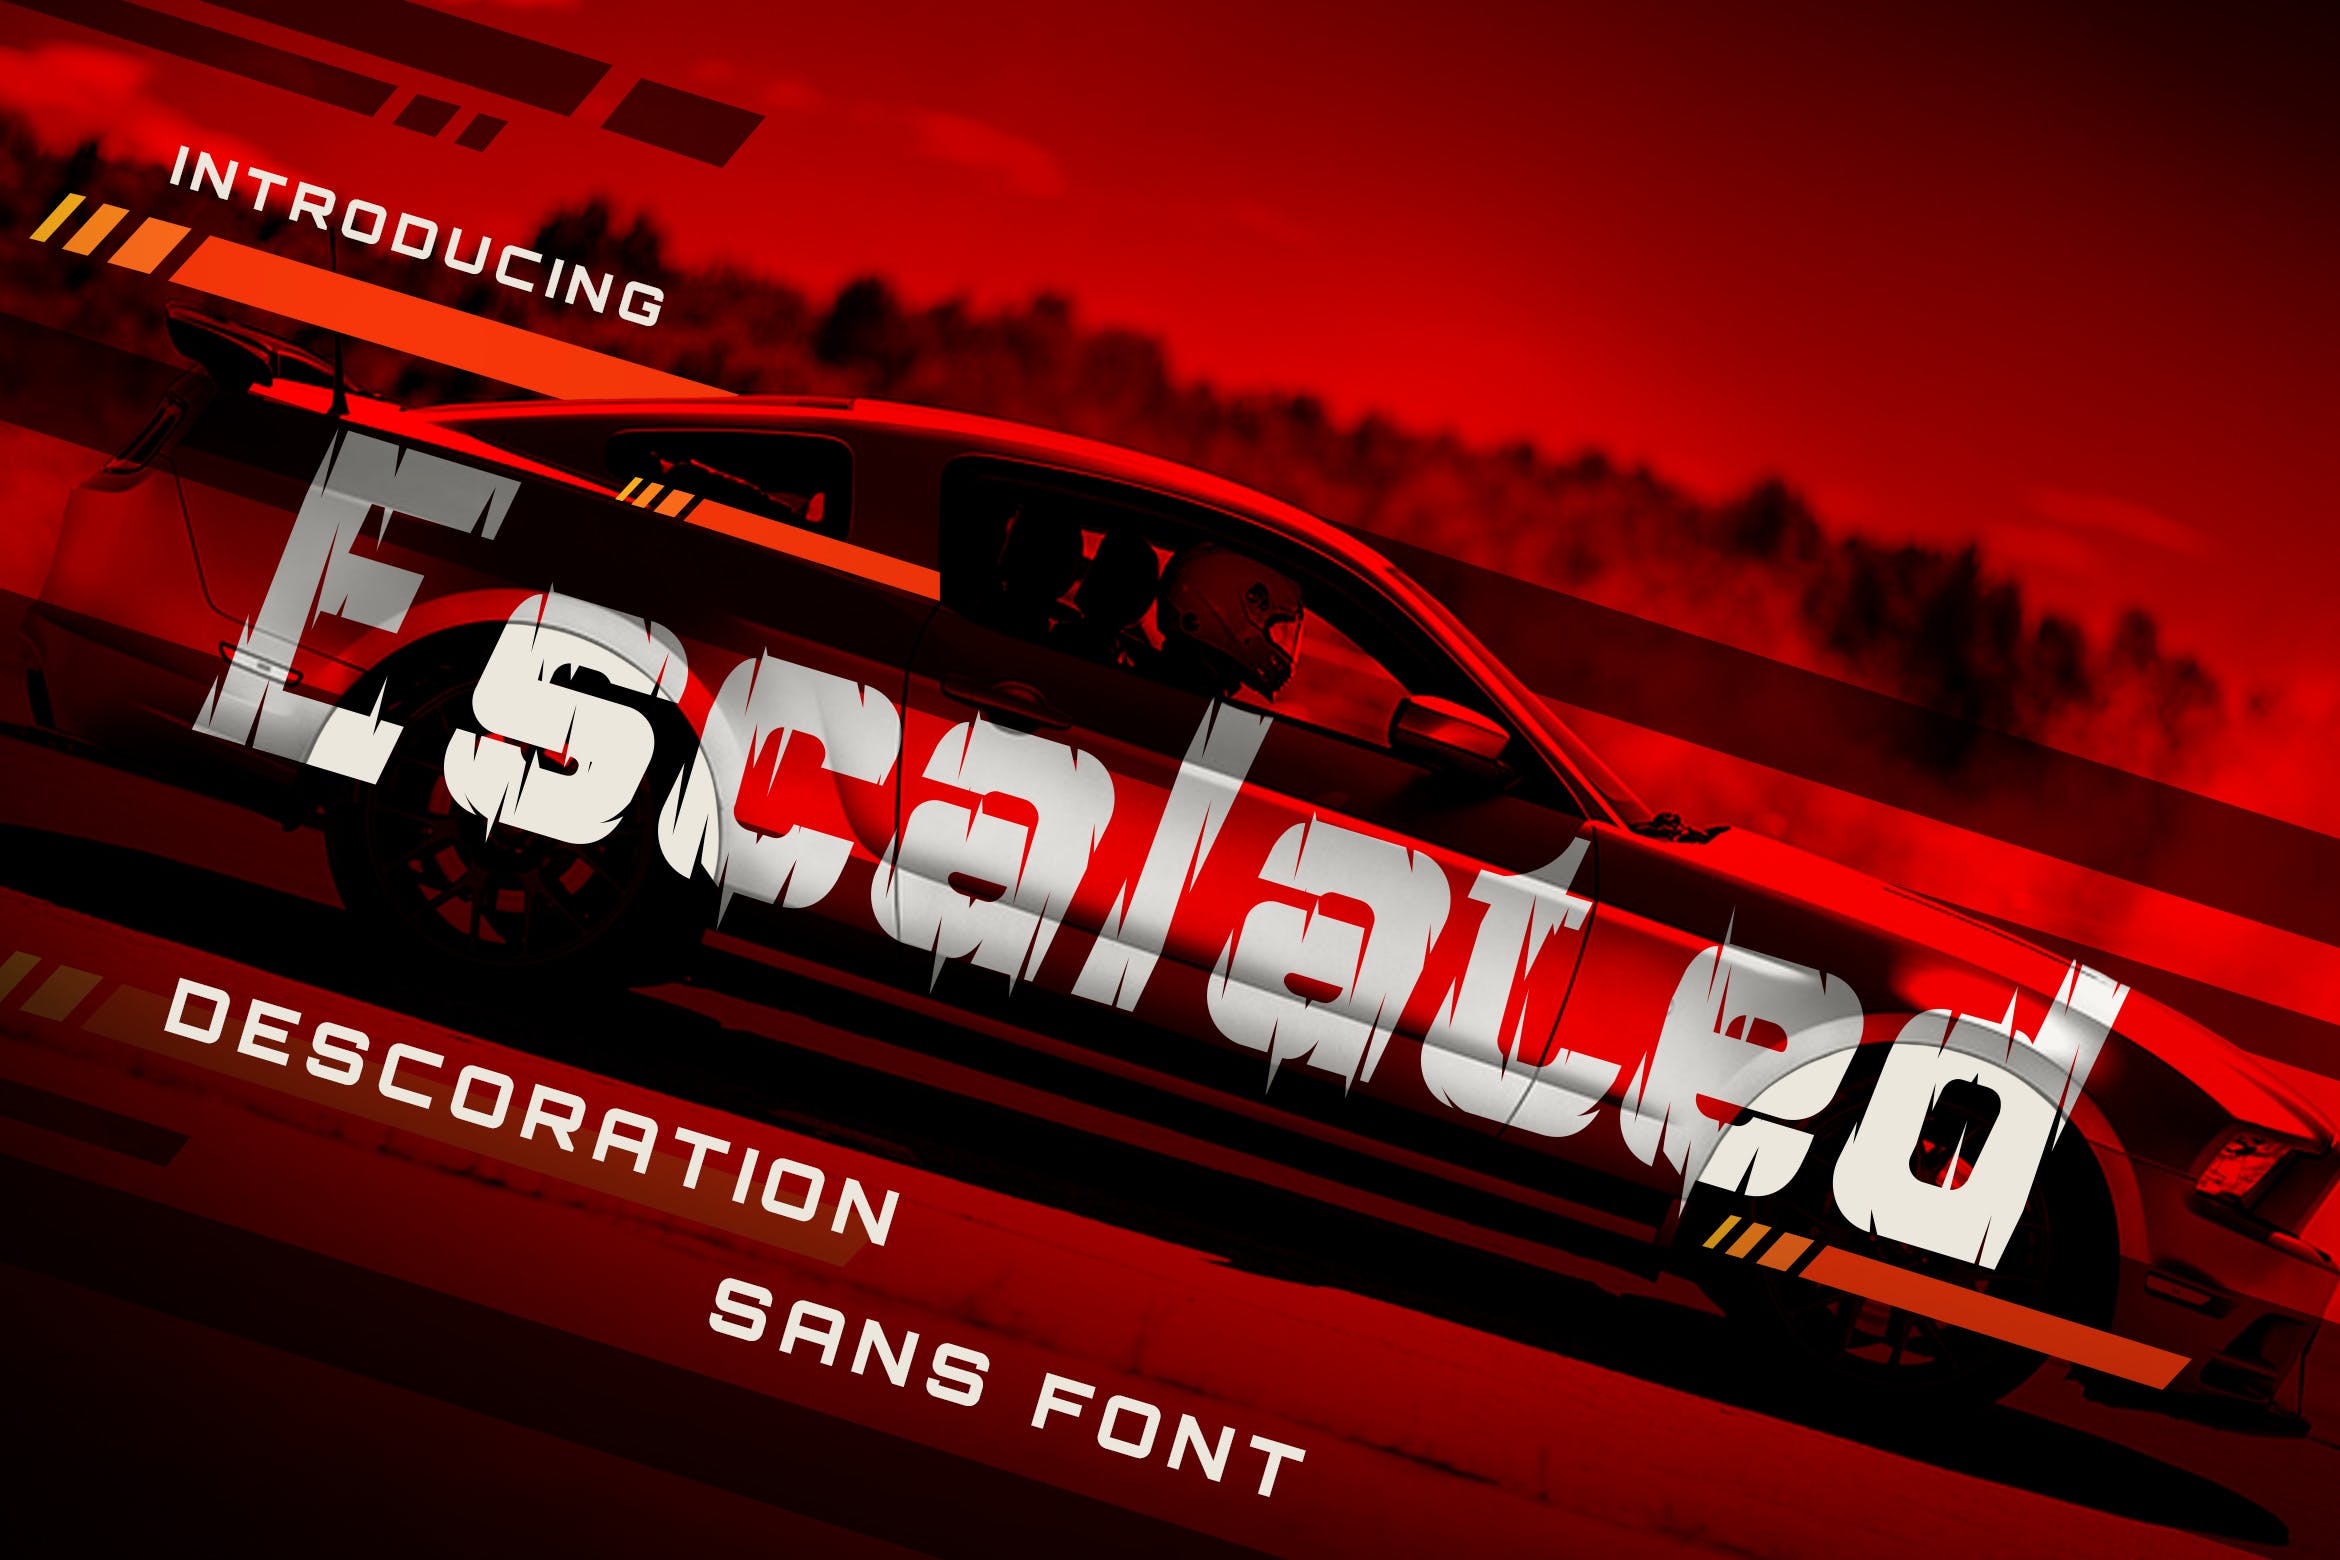 独特动感艺术风格英文无衬线字体 Escalated – Fast Motorsport Racing Font设计素材模板